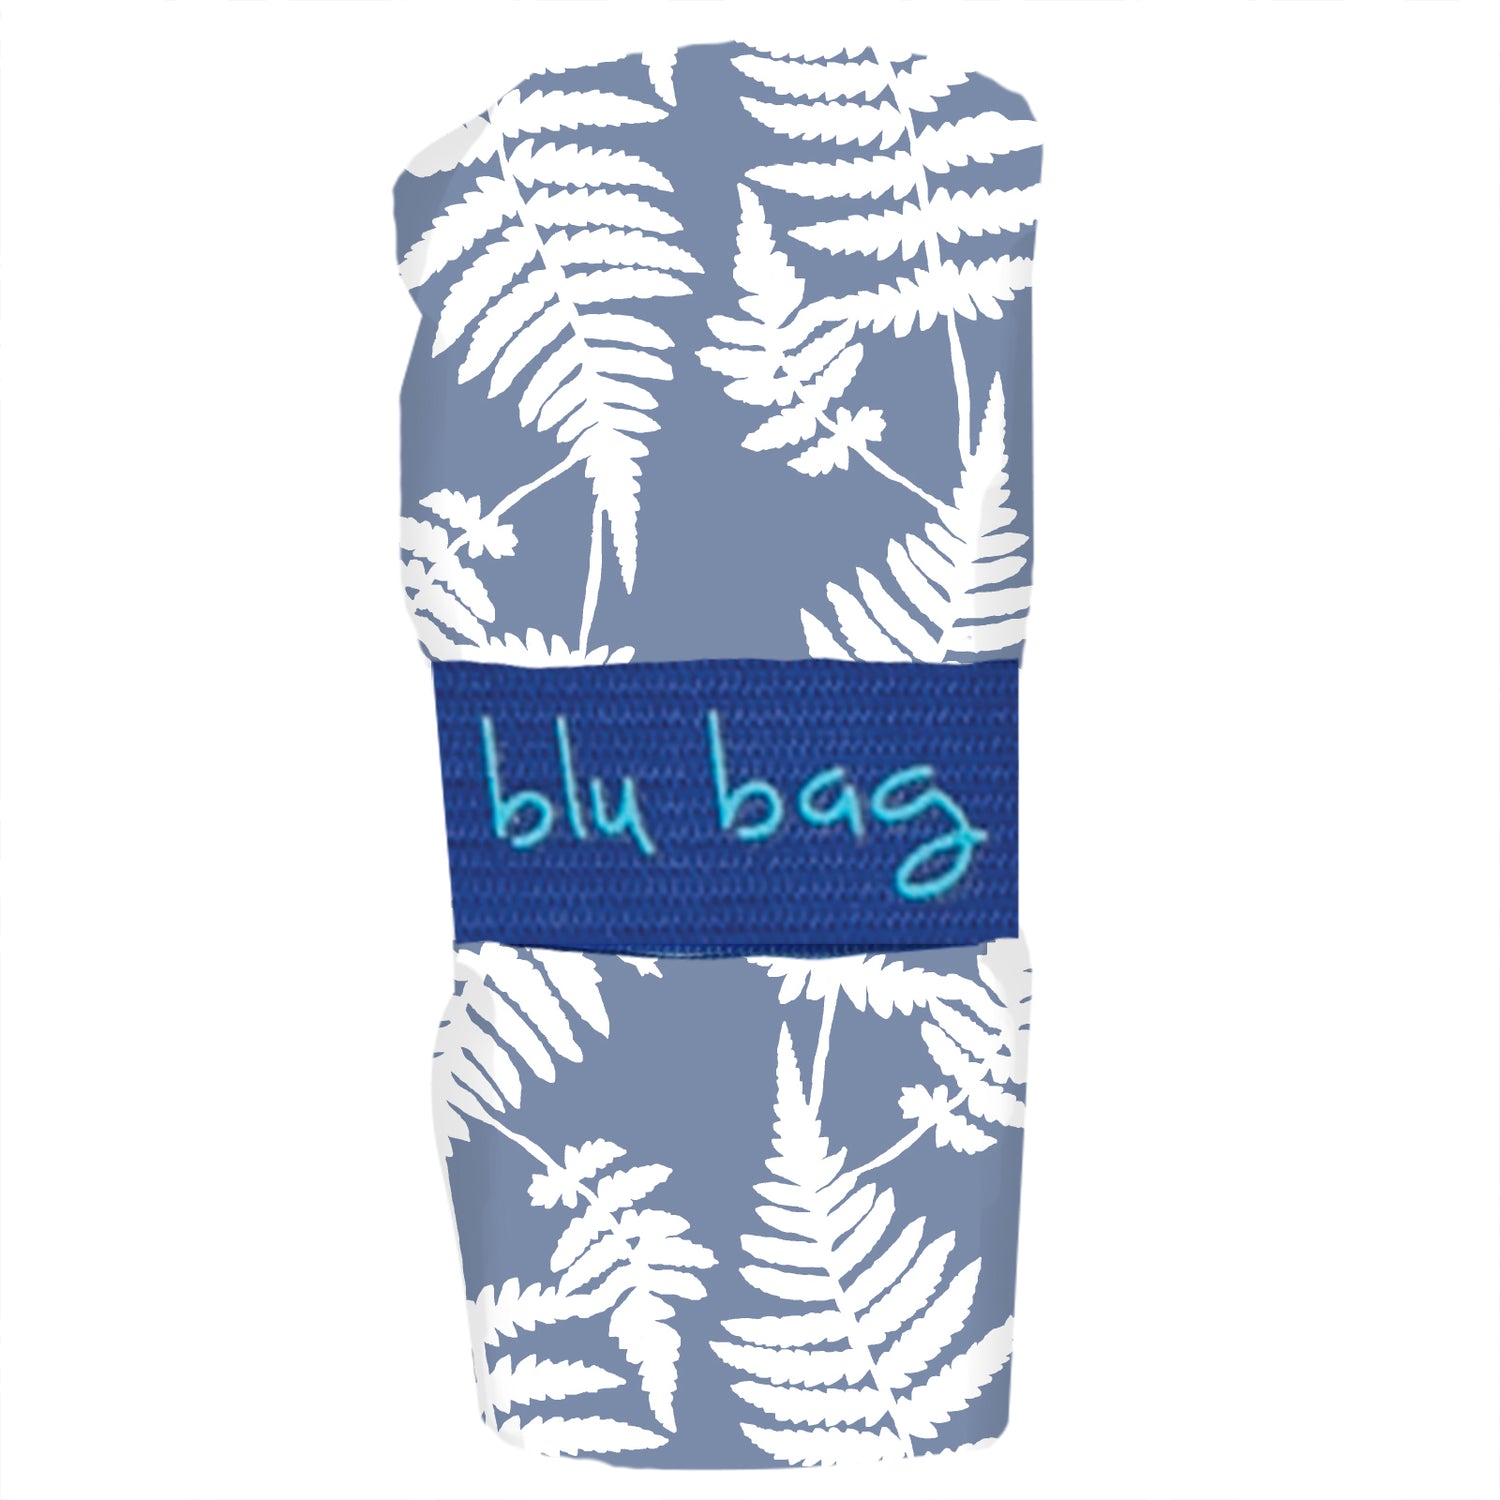 Fern Blu Bag Reusable Shopping Bag - Machine Washable Reusable Shopping Bag - rockflowerpaper